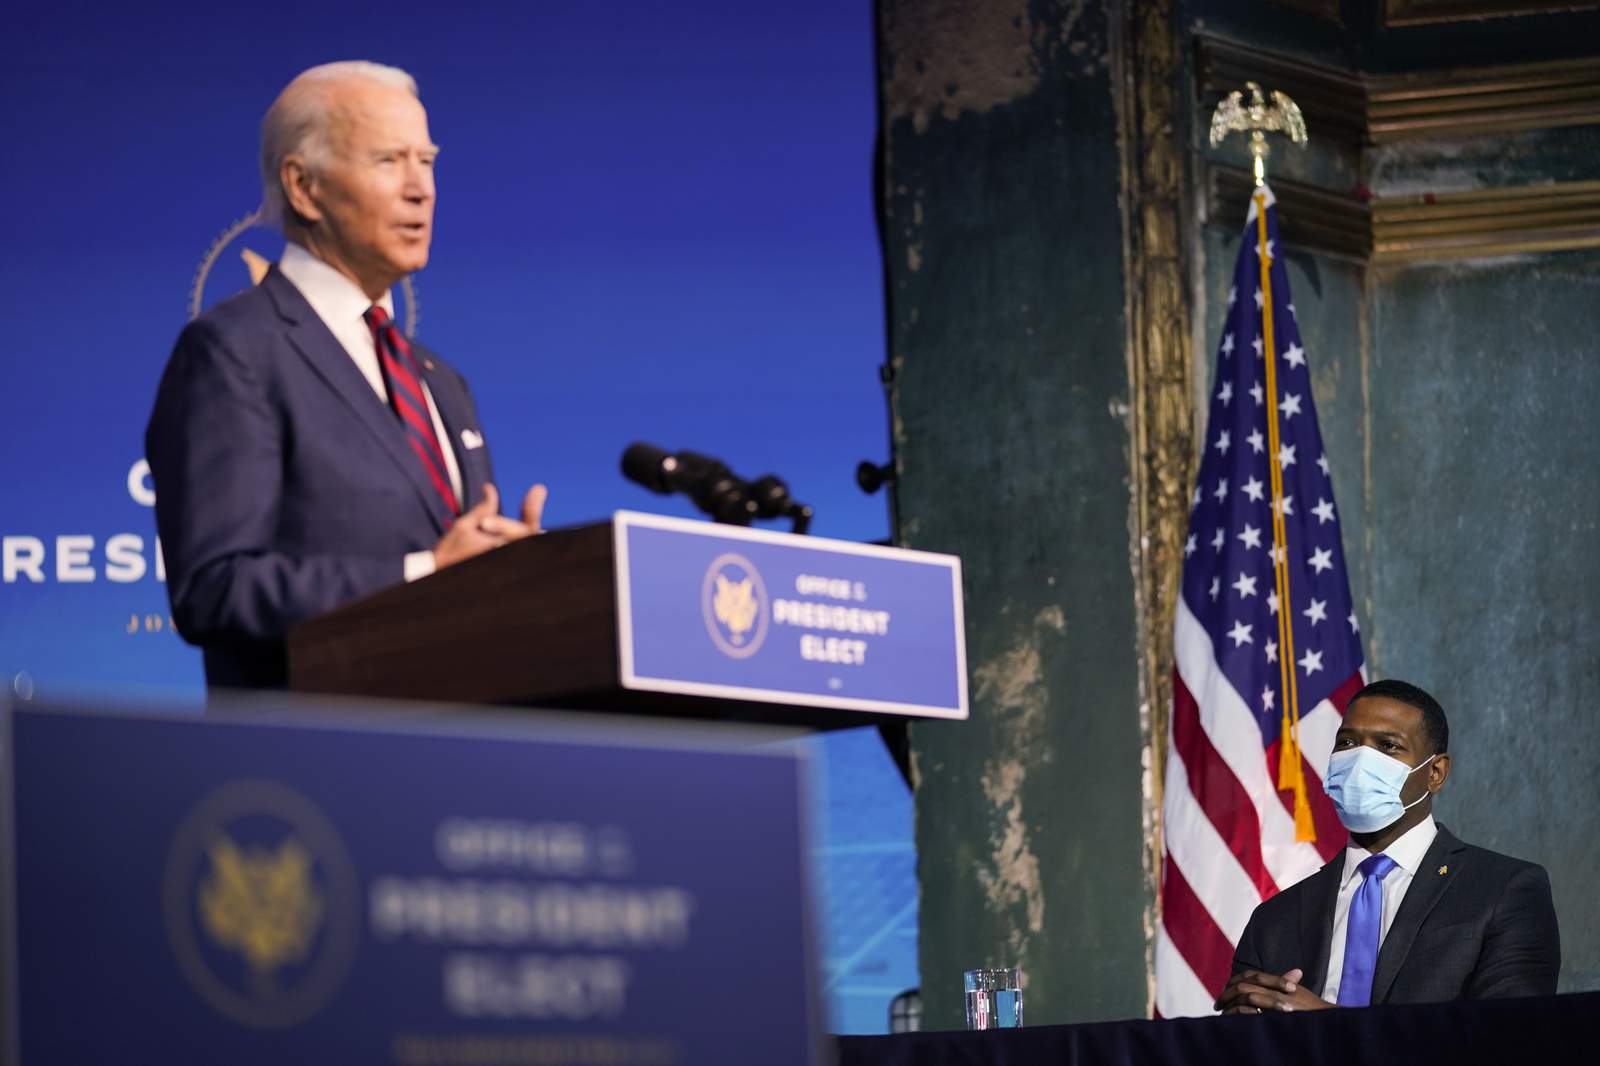 Biden: Environmental team heavy on experience, diversity